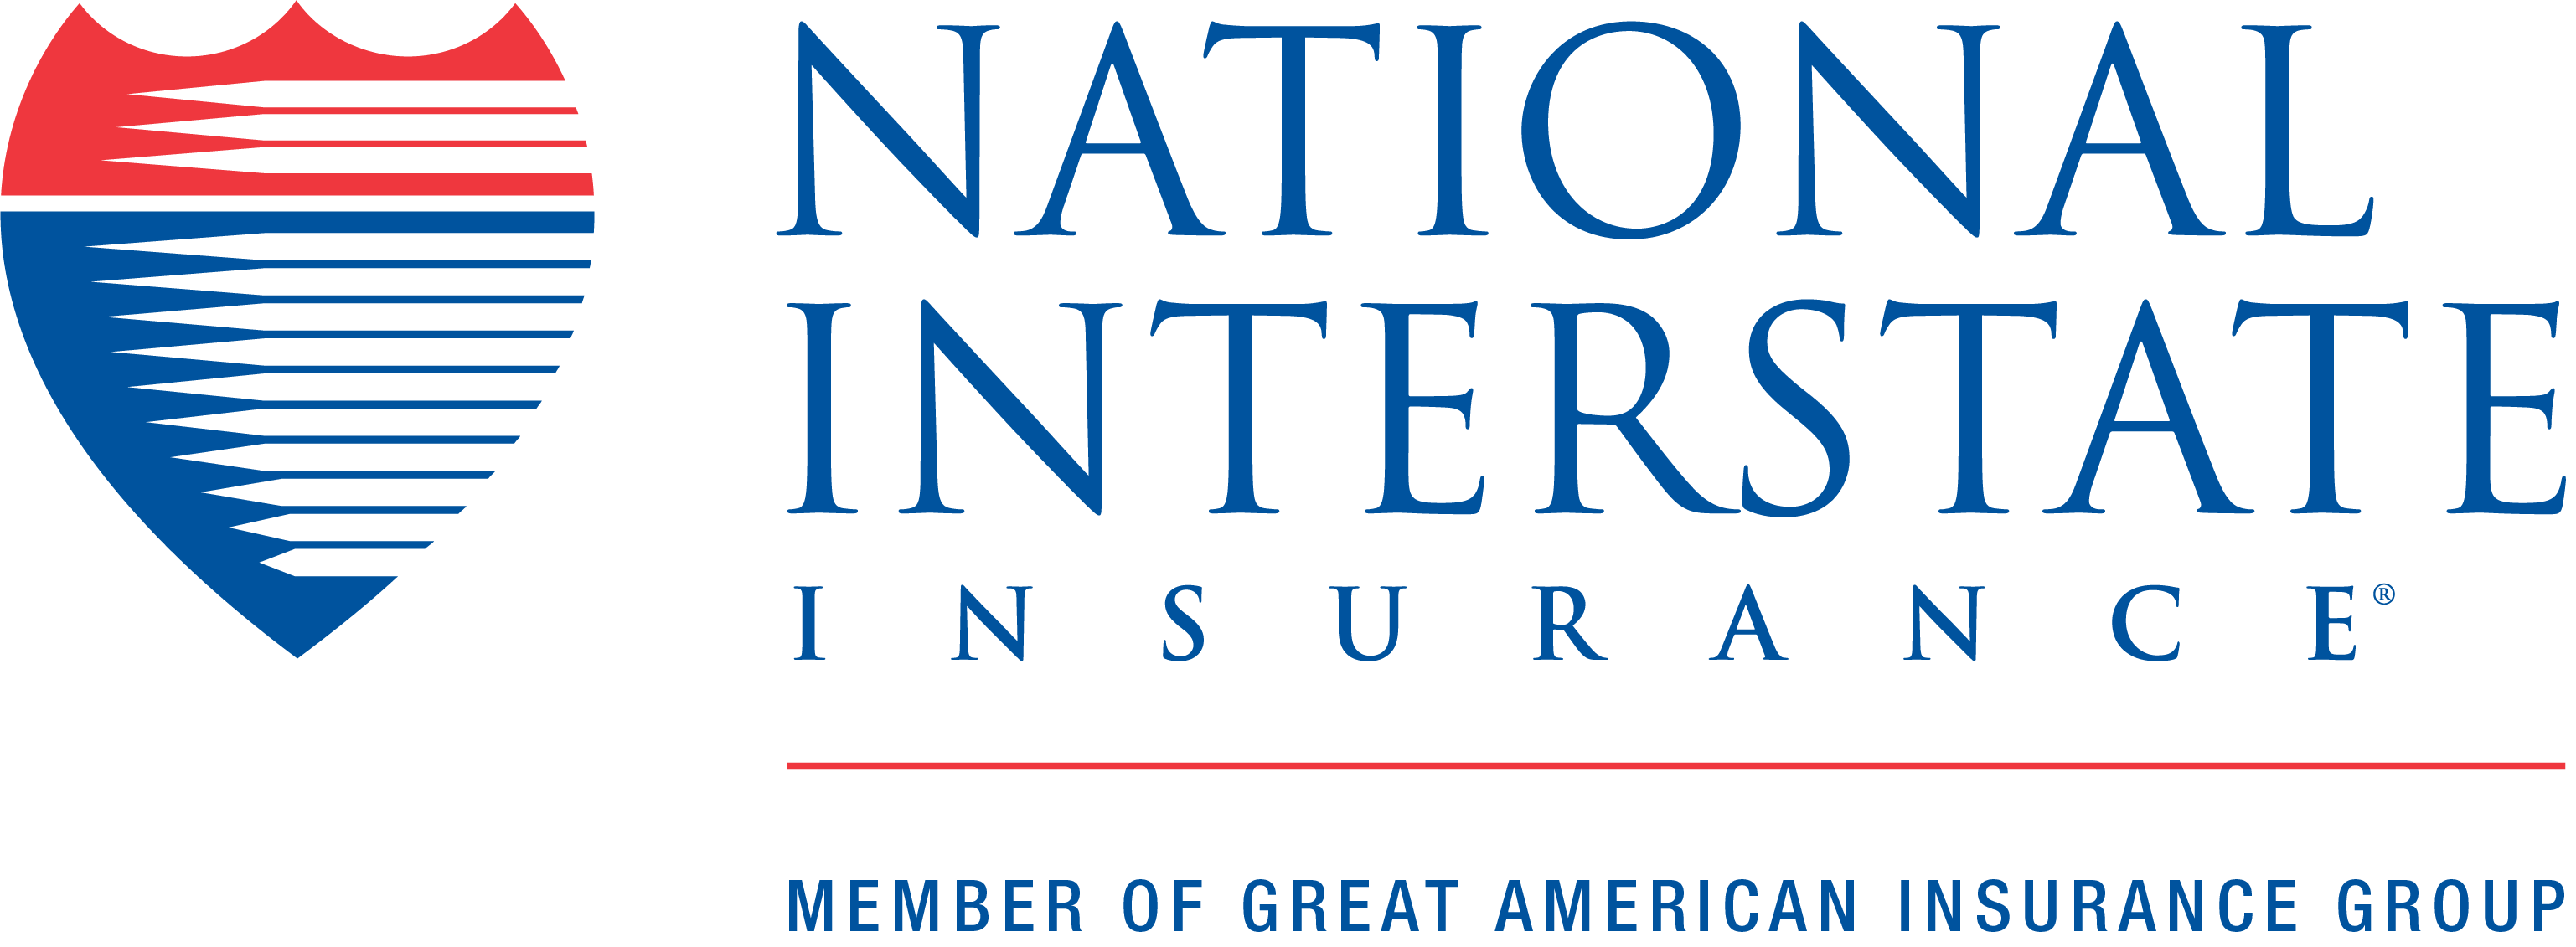 National Interstate Insurance Company